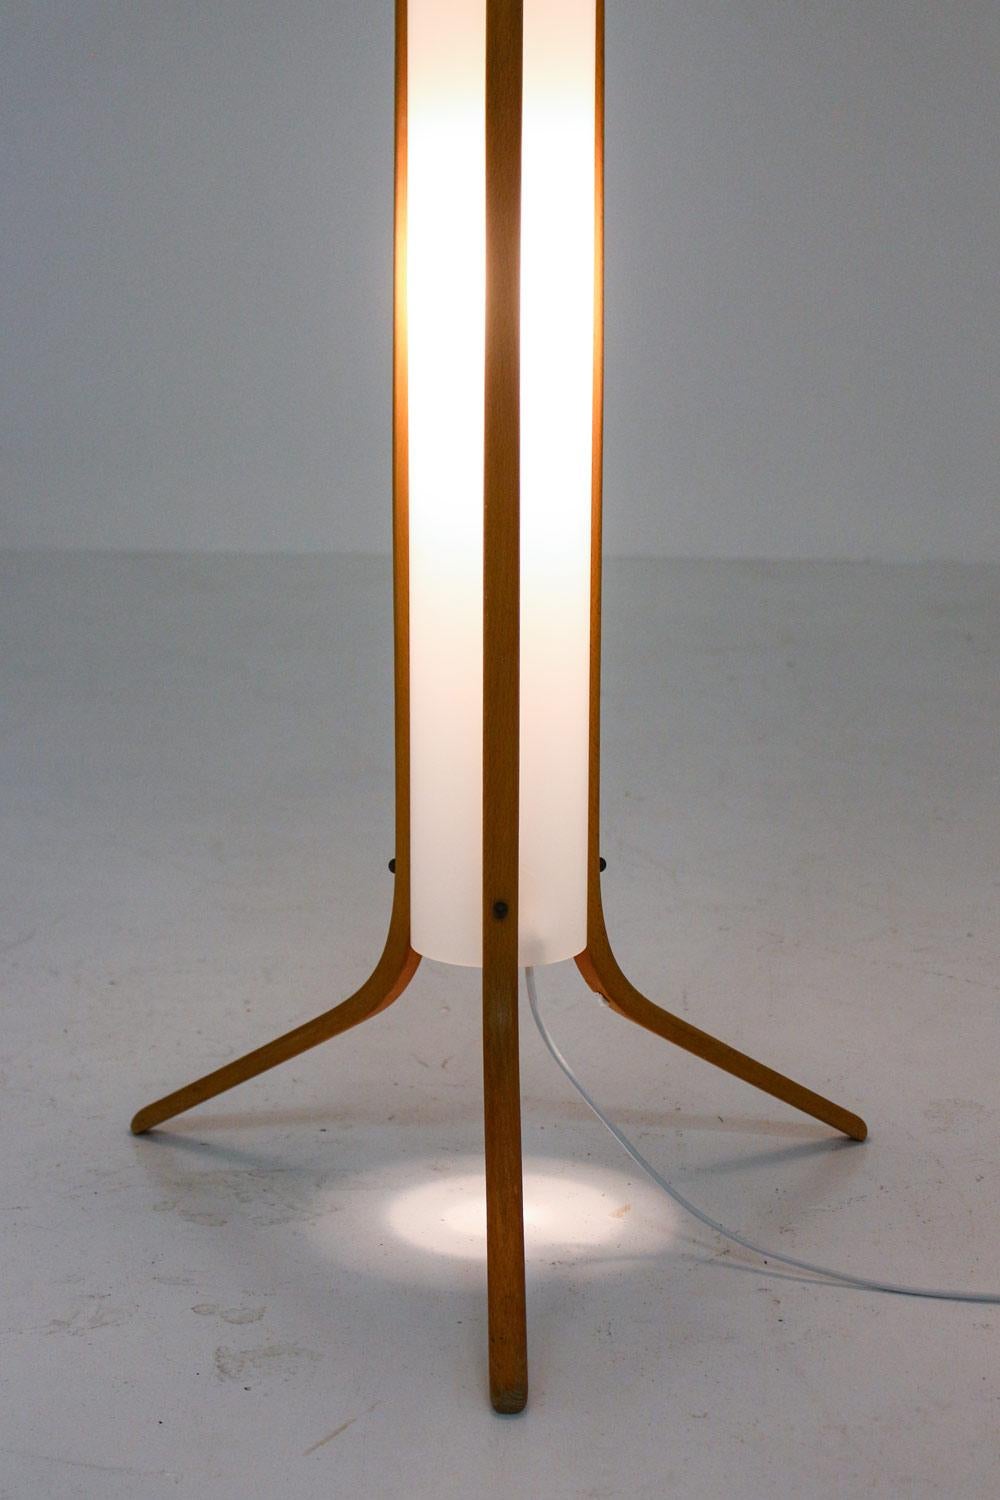 Swedish Midcentury Floor Lamp in Acrylic and Beech by Eskilstuna, 1960s For Sale 2